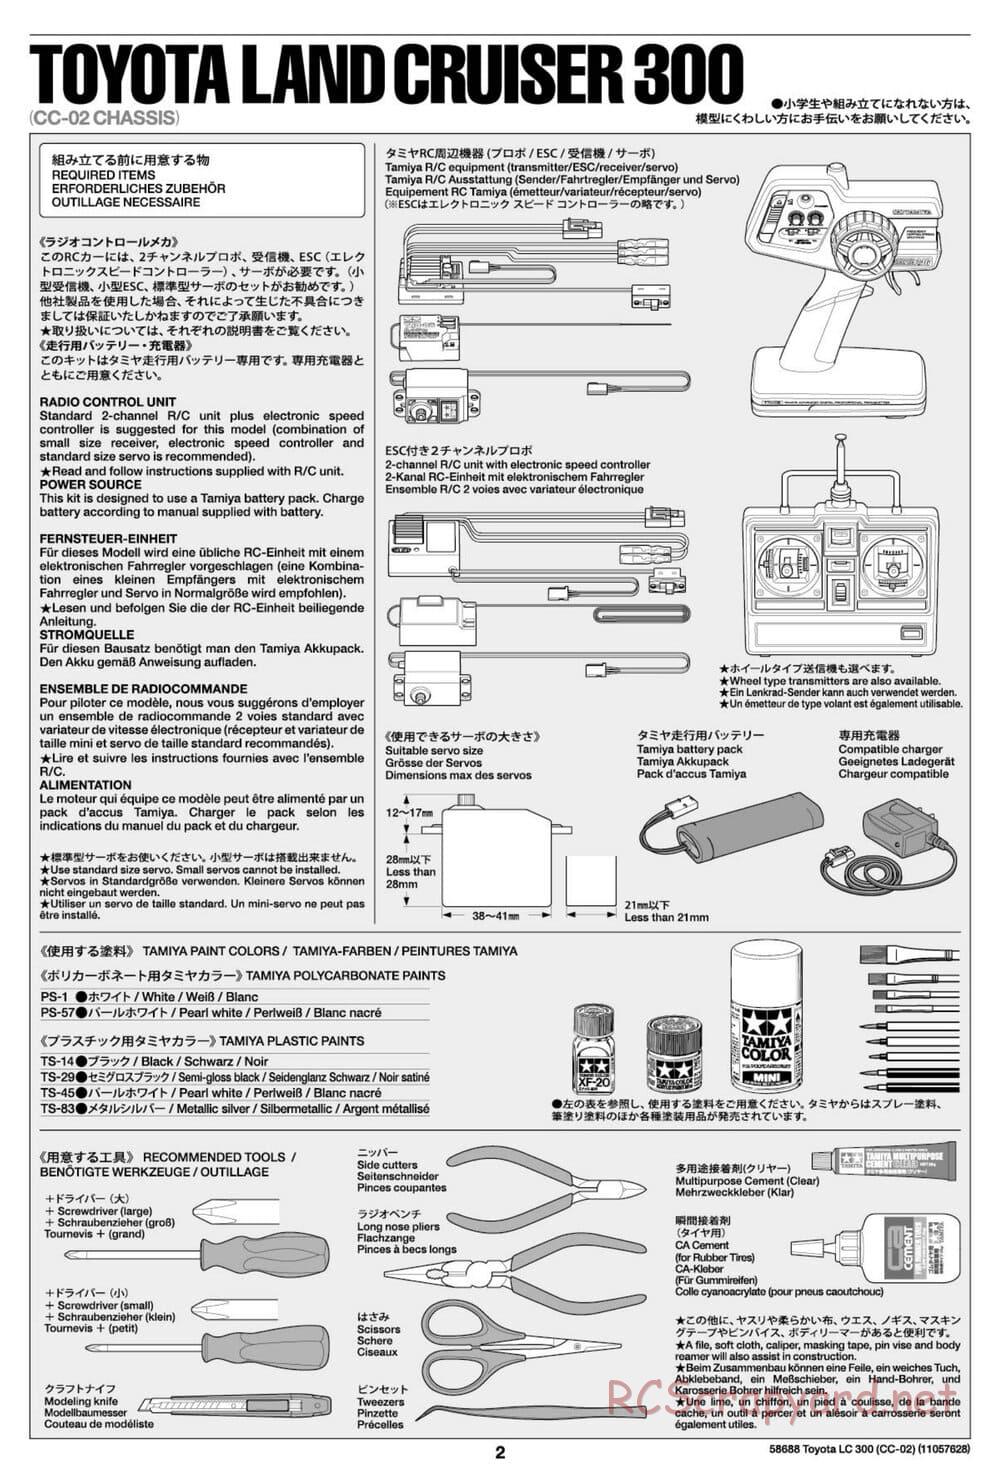 Tamiya - Toyota Land Cruiser 300 - CC-02 Chassis - Manual - Page 2